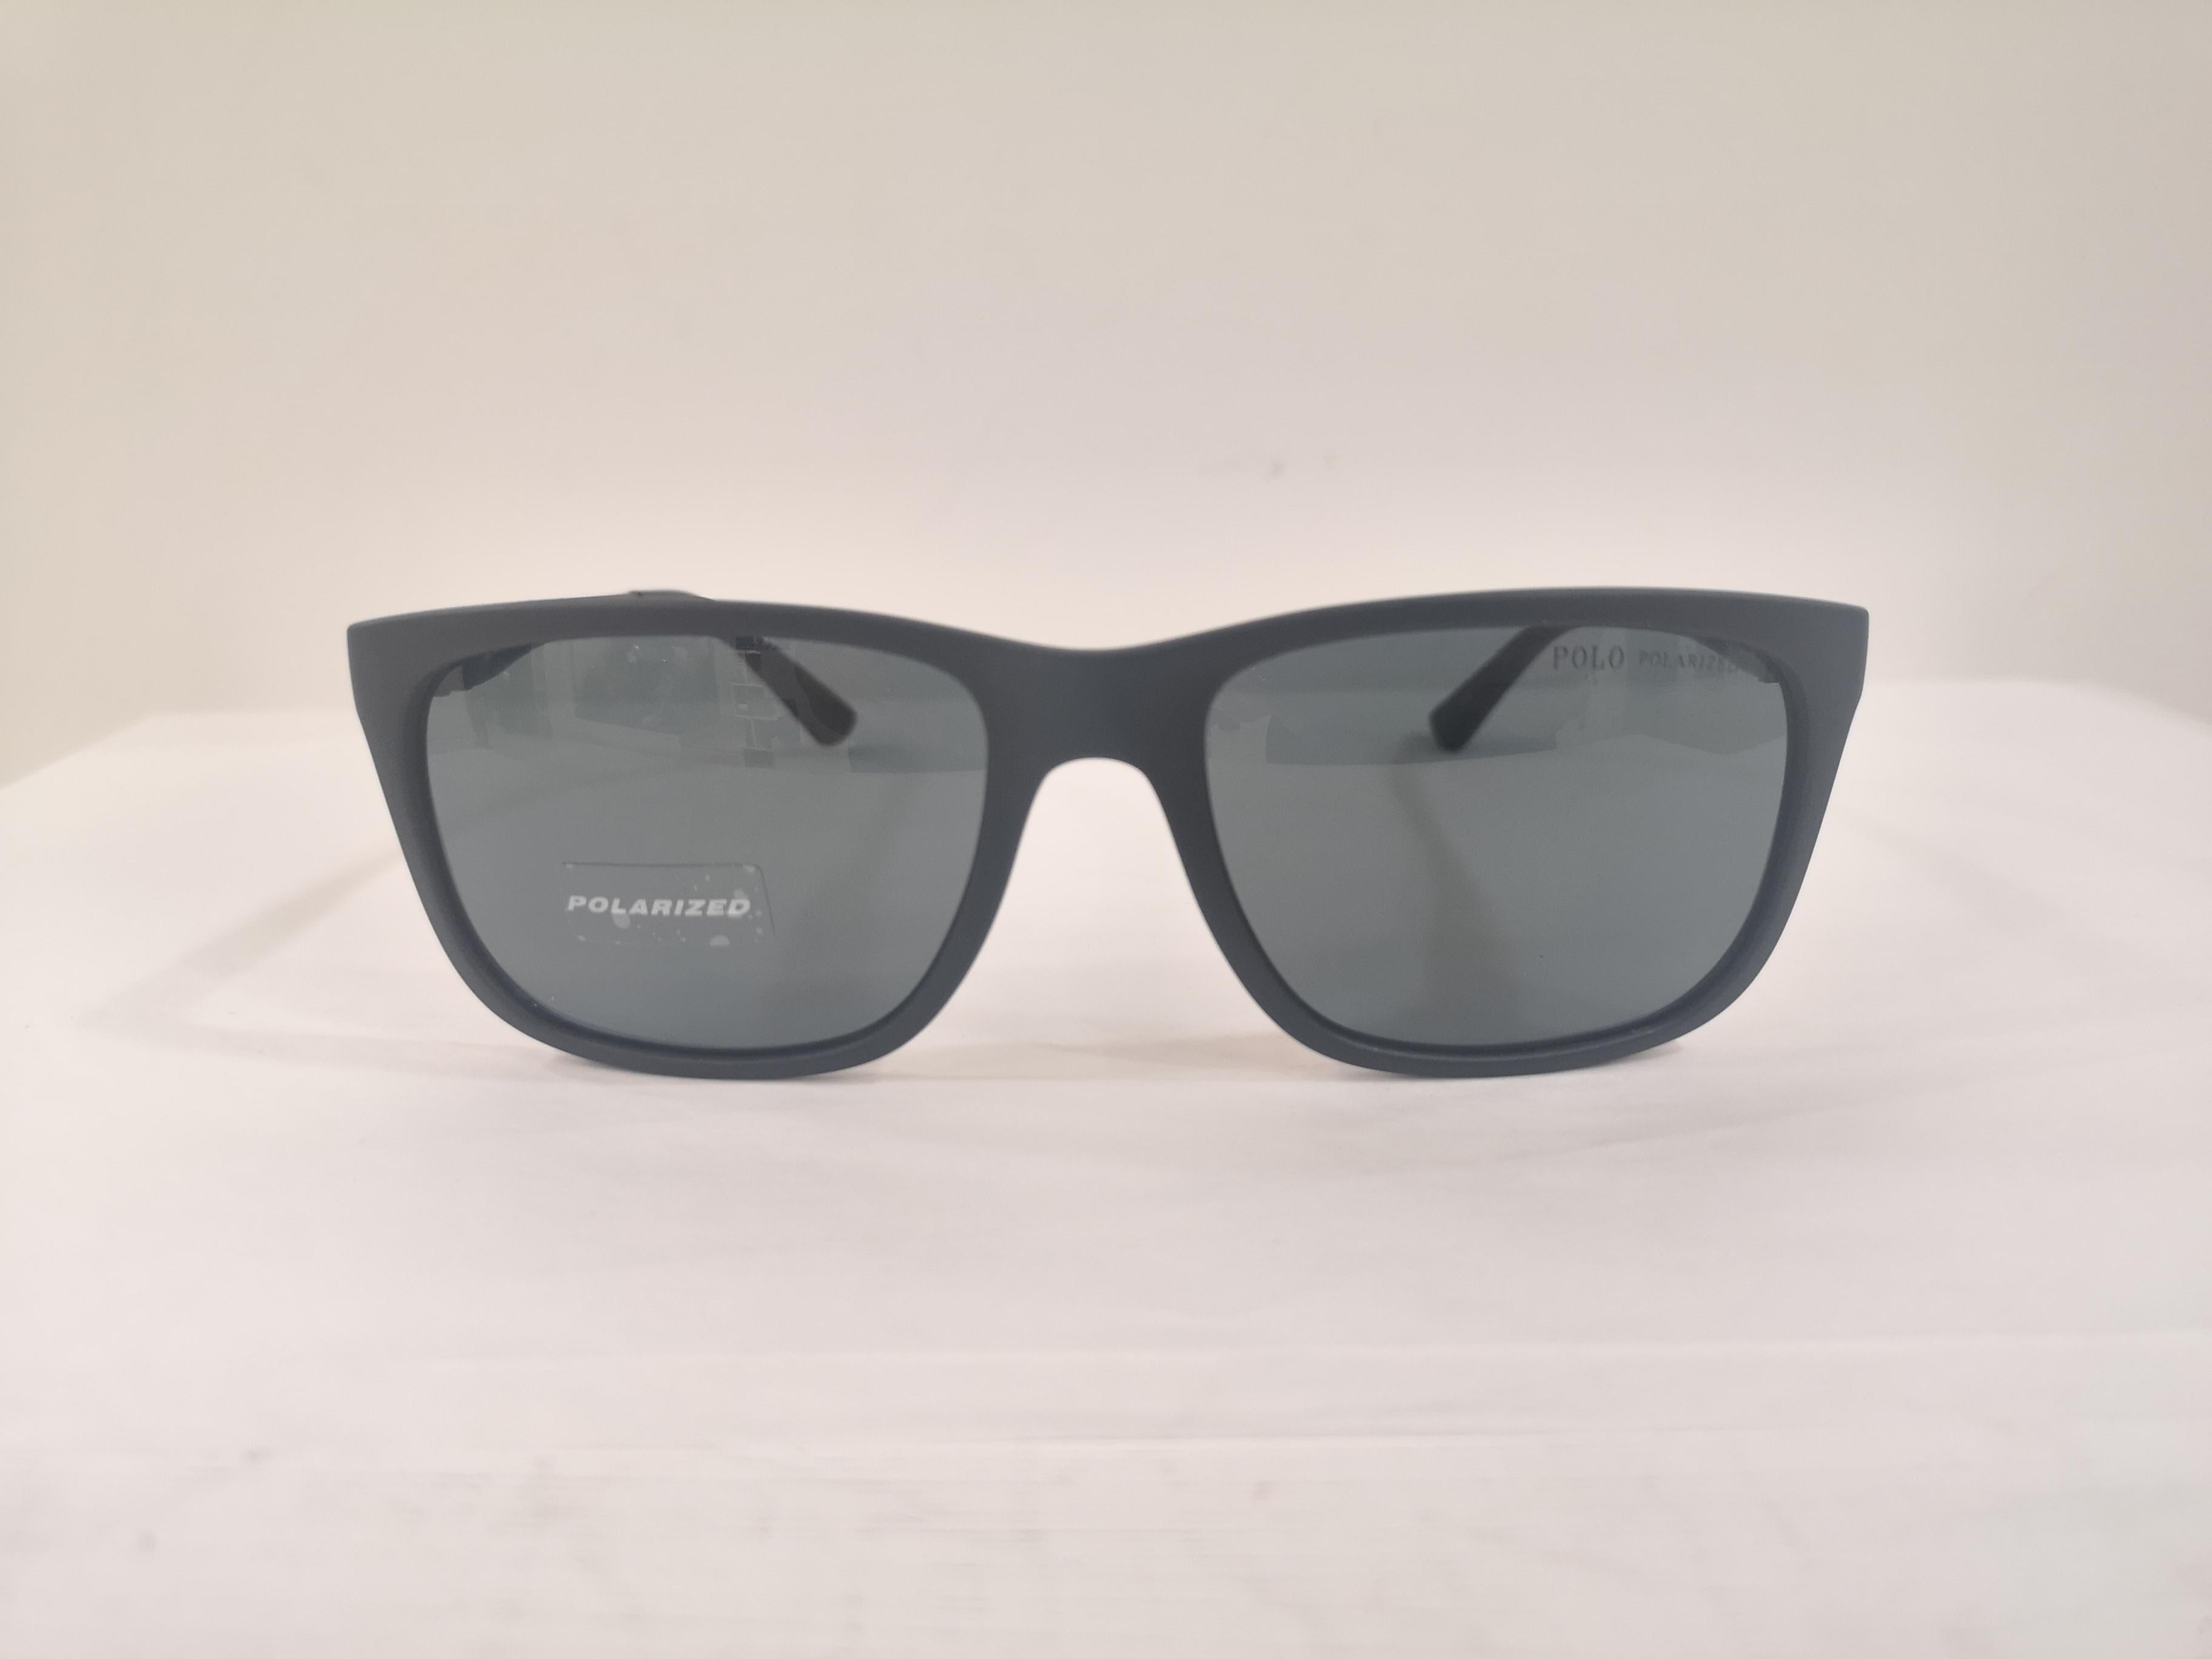 Ralph Lauren blue polarized sunglasses NWOT 1